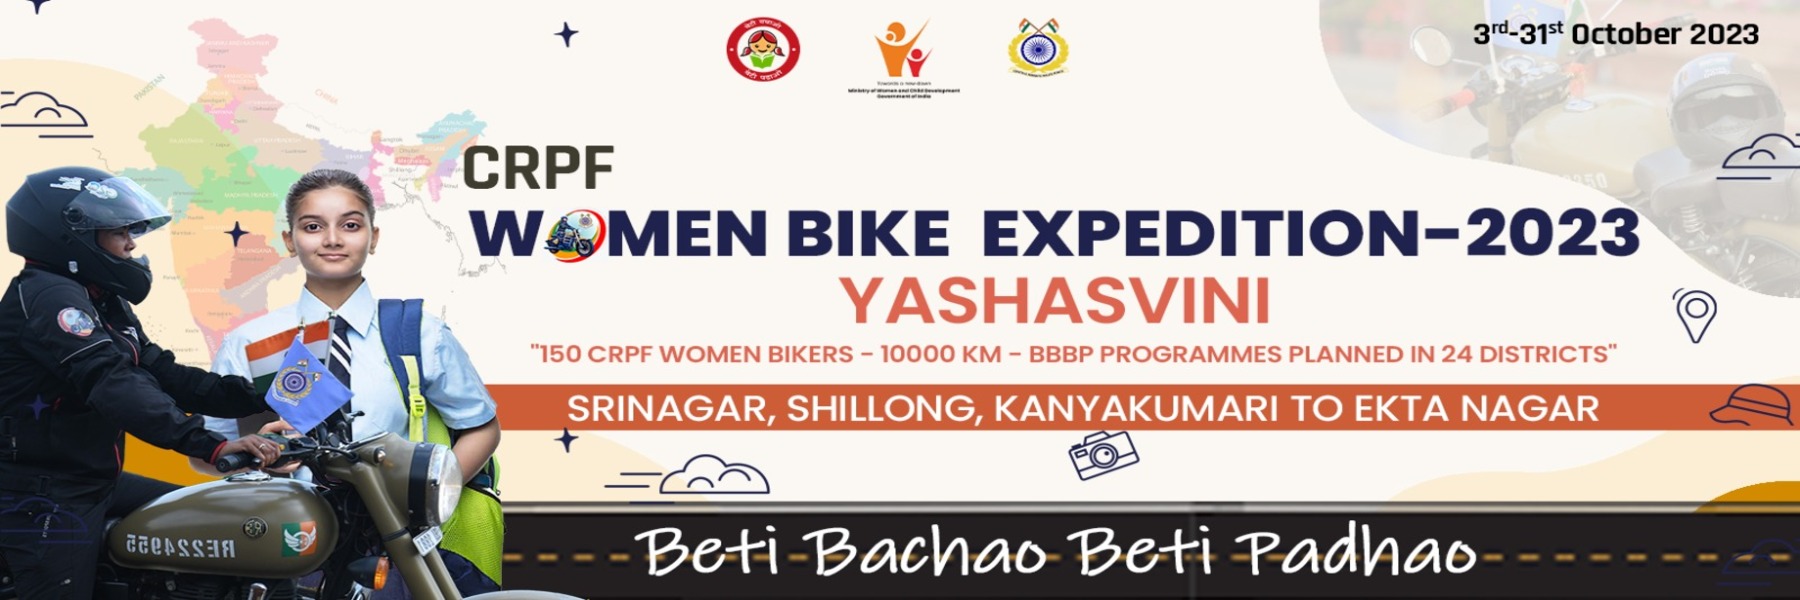 Women bike expedition - 2023